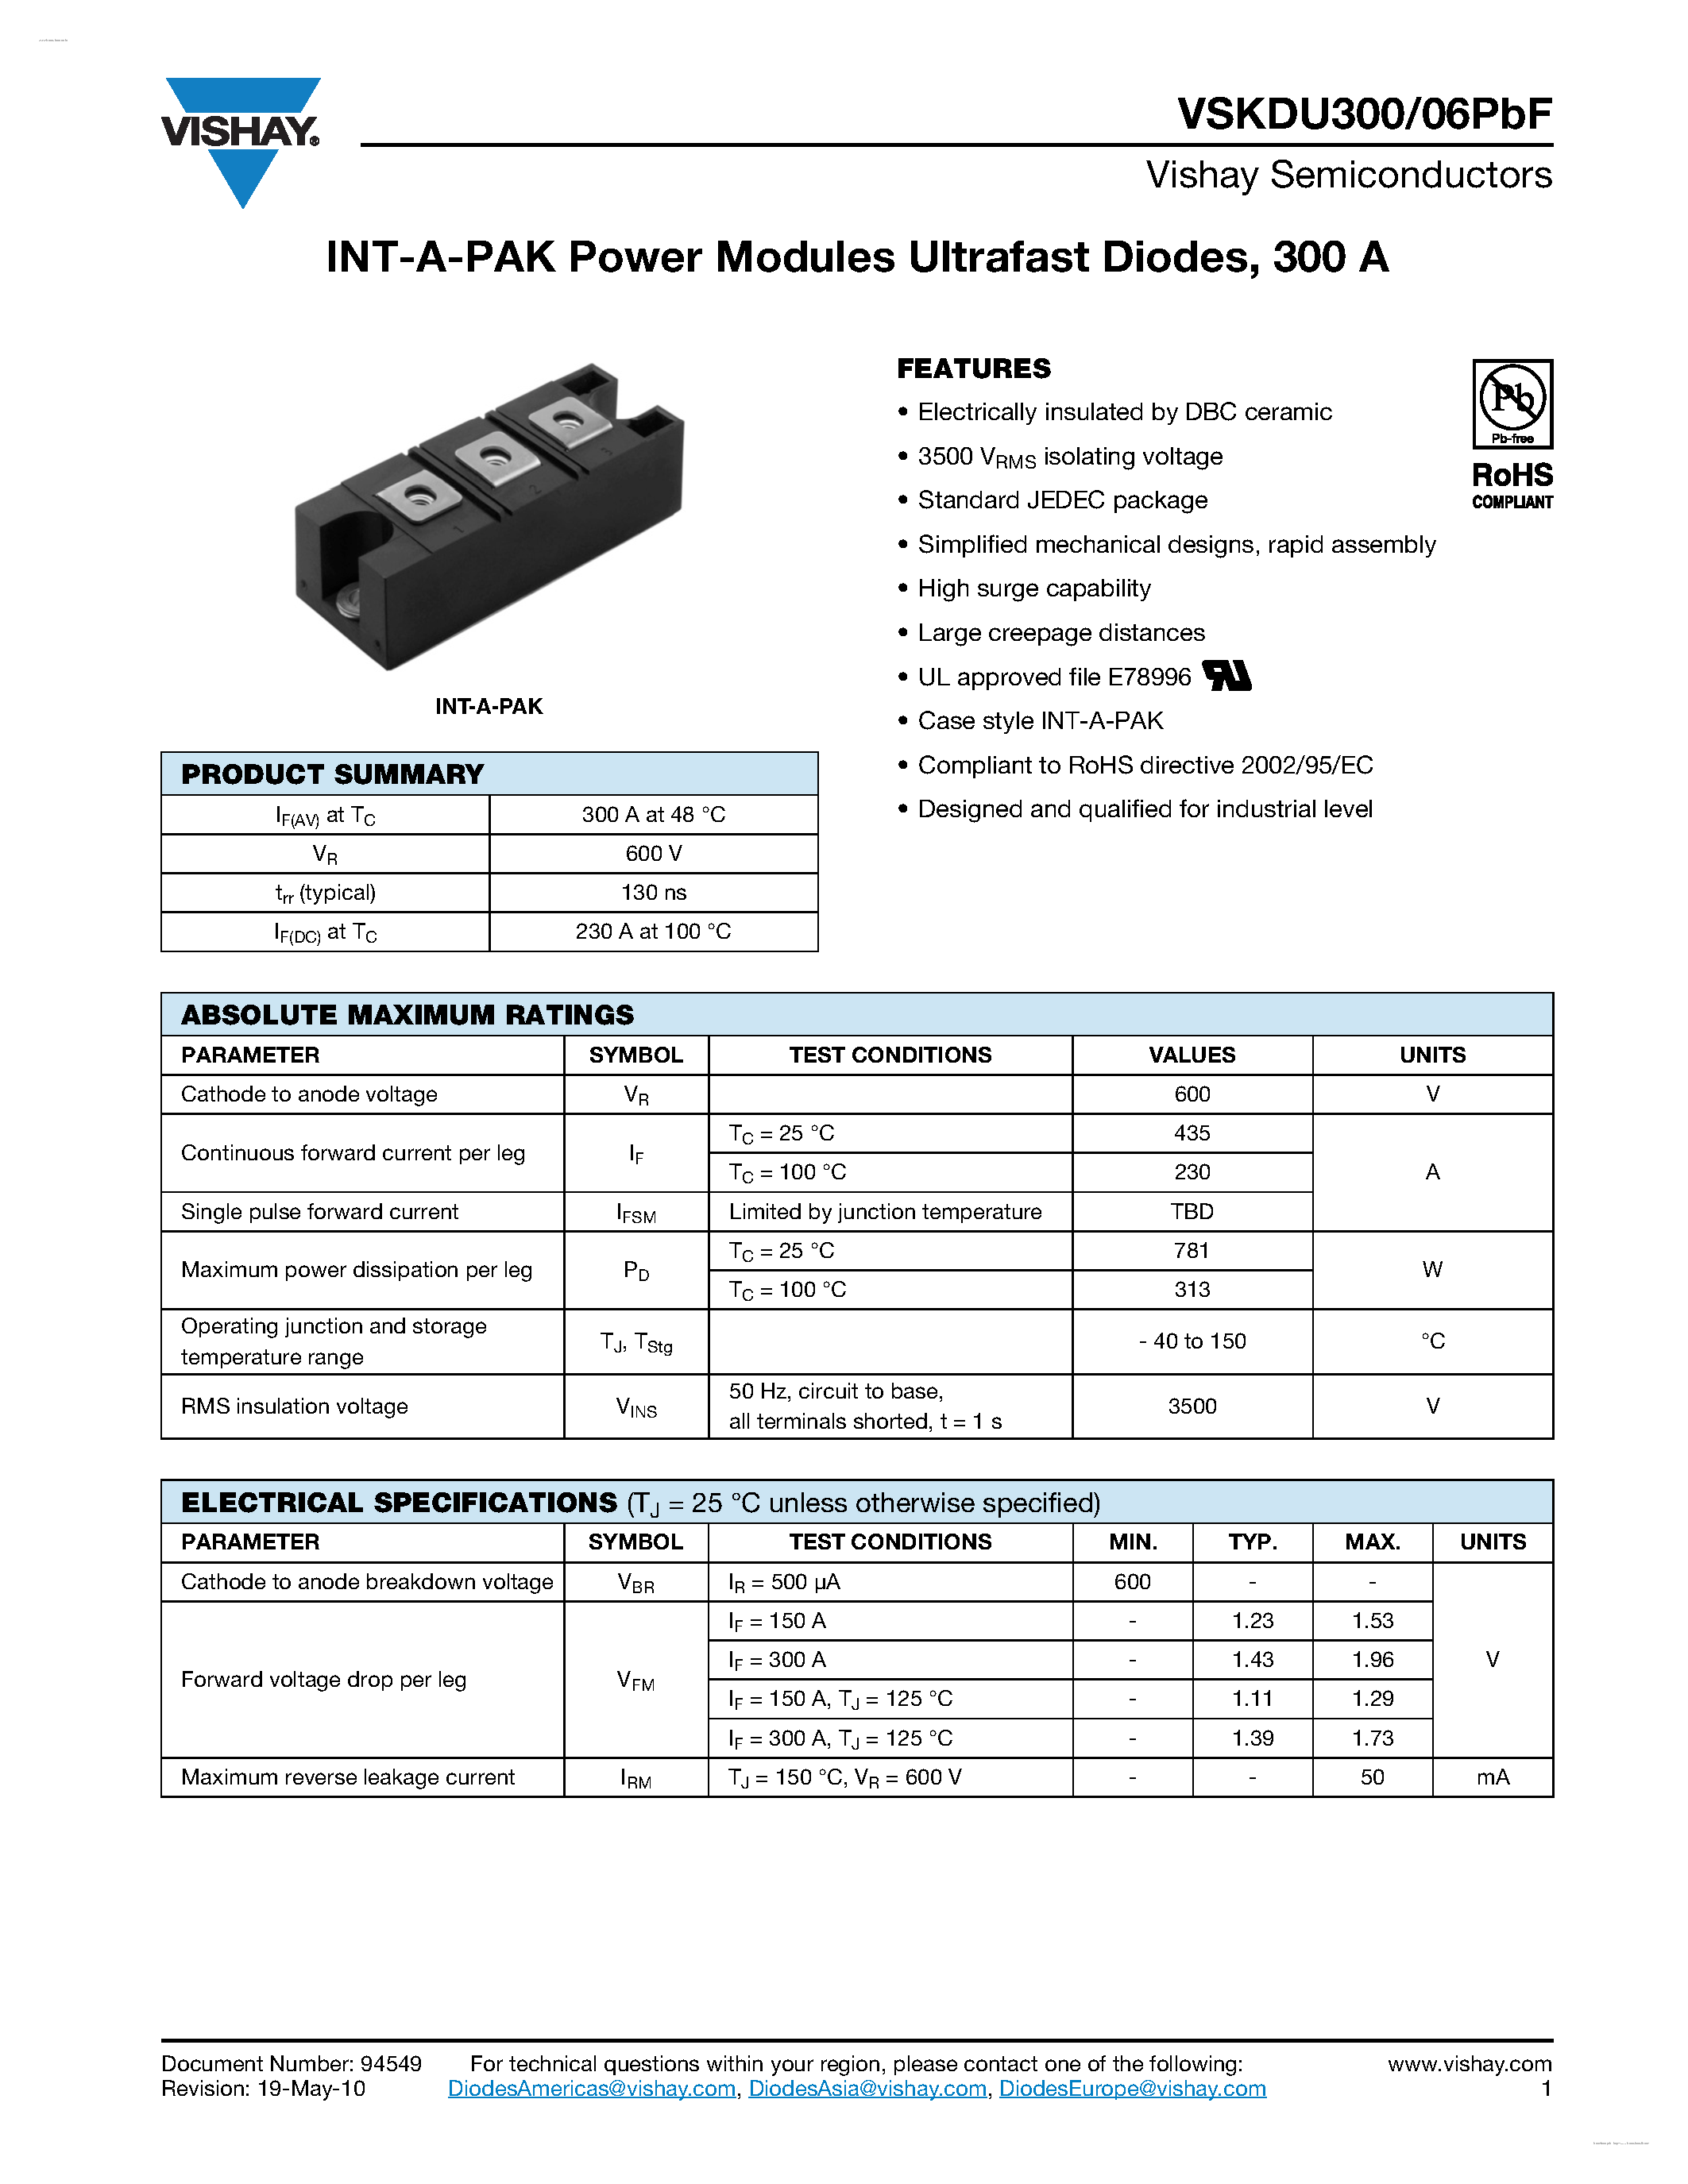 Даташит VSKDU300/06PBF - INT-A-PAK Power Modules Ultrafast Diodes страница 1